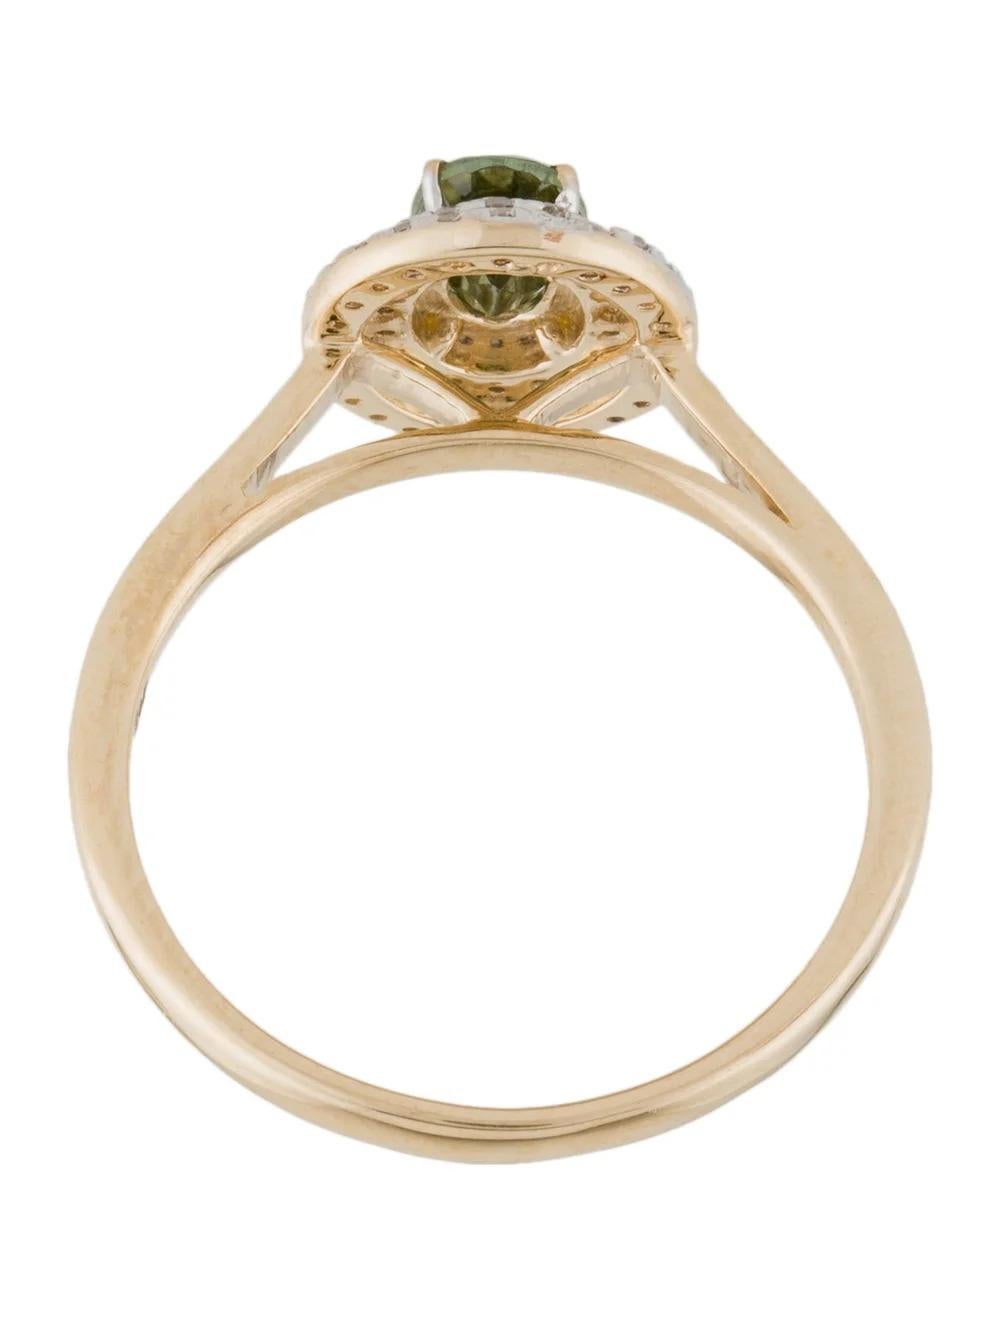 Women's 14K Tourmaline & Diamond Cocktail Ring, Size 6.5 - Elegant Statement Jewelry For Sale